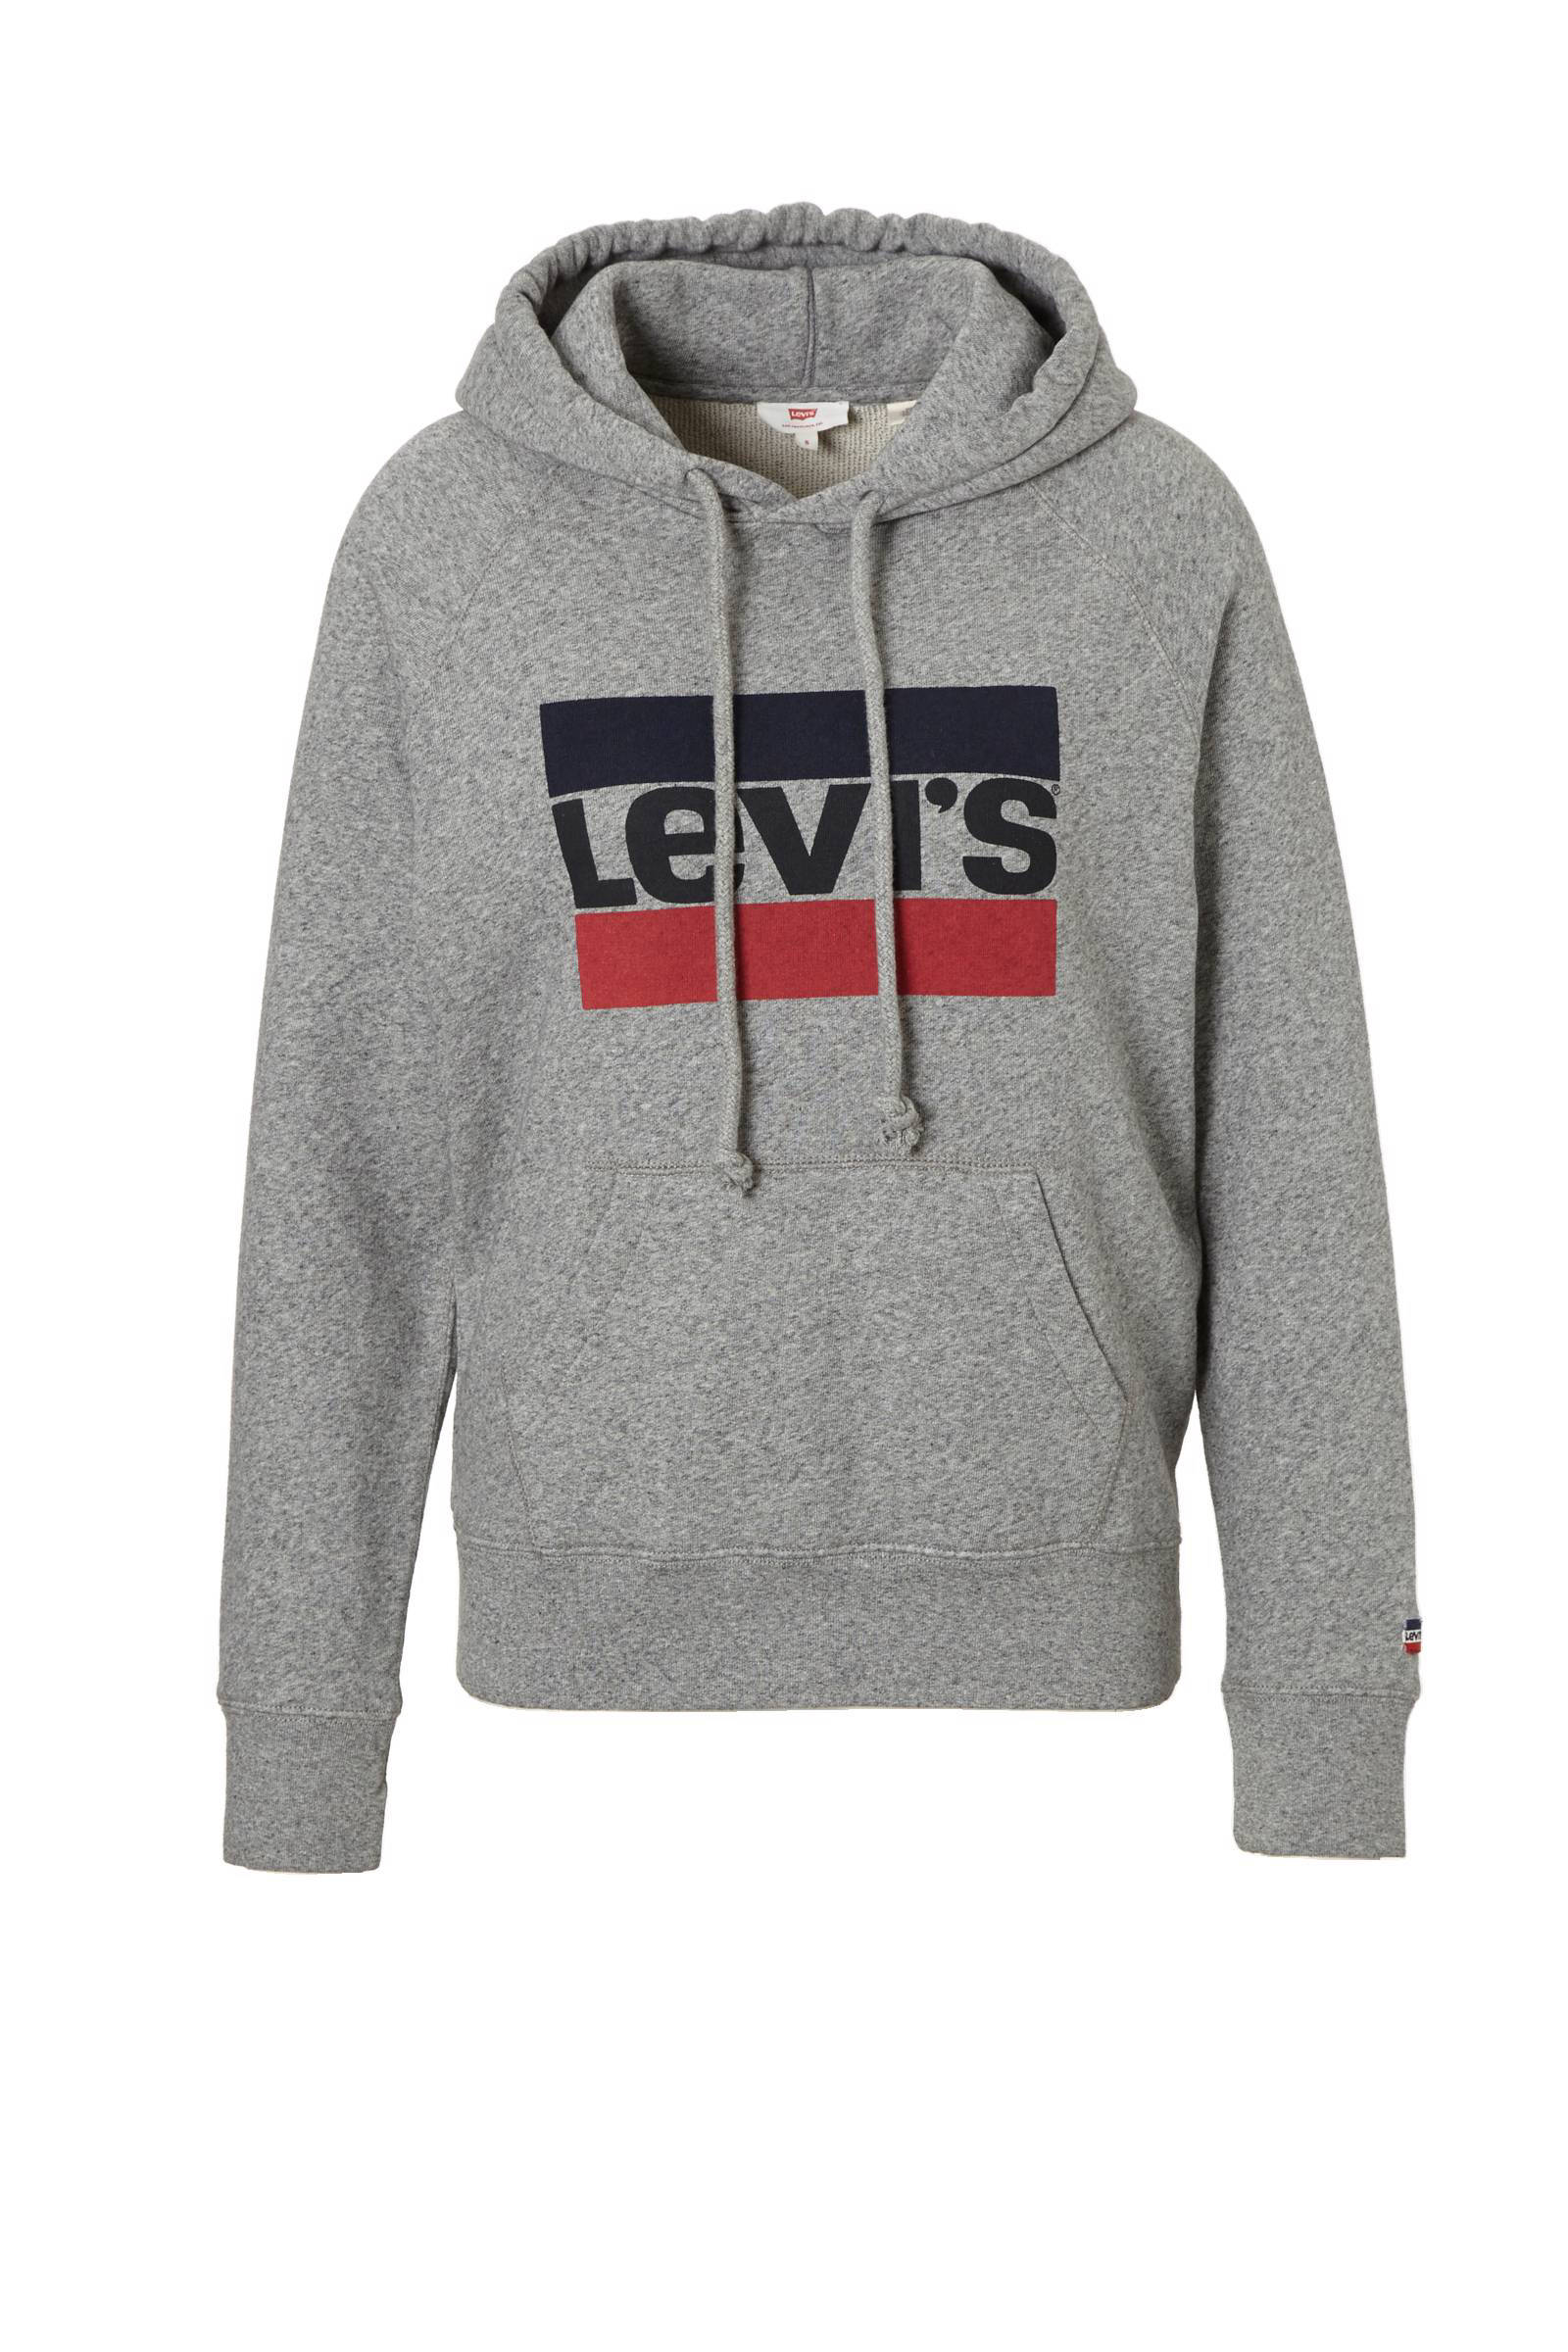 Levi's Graphic Sport Hoodie sweater 